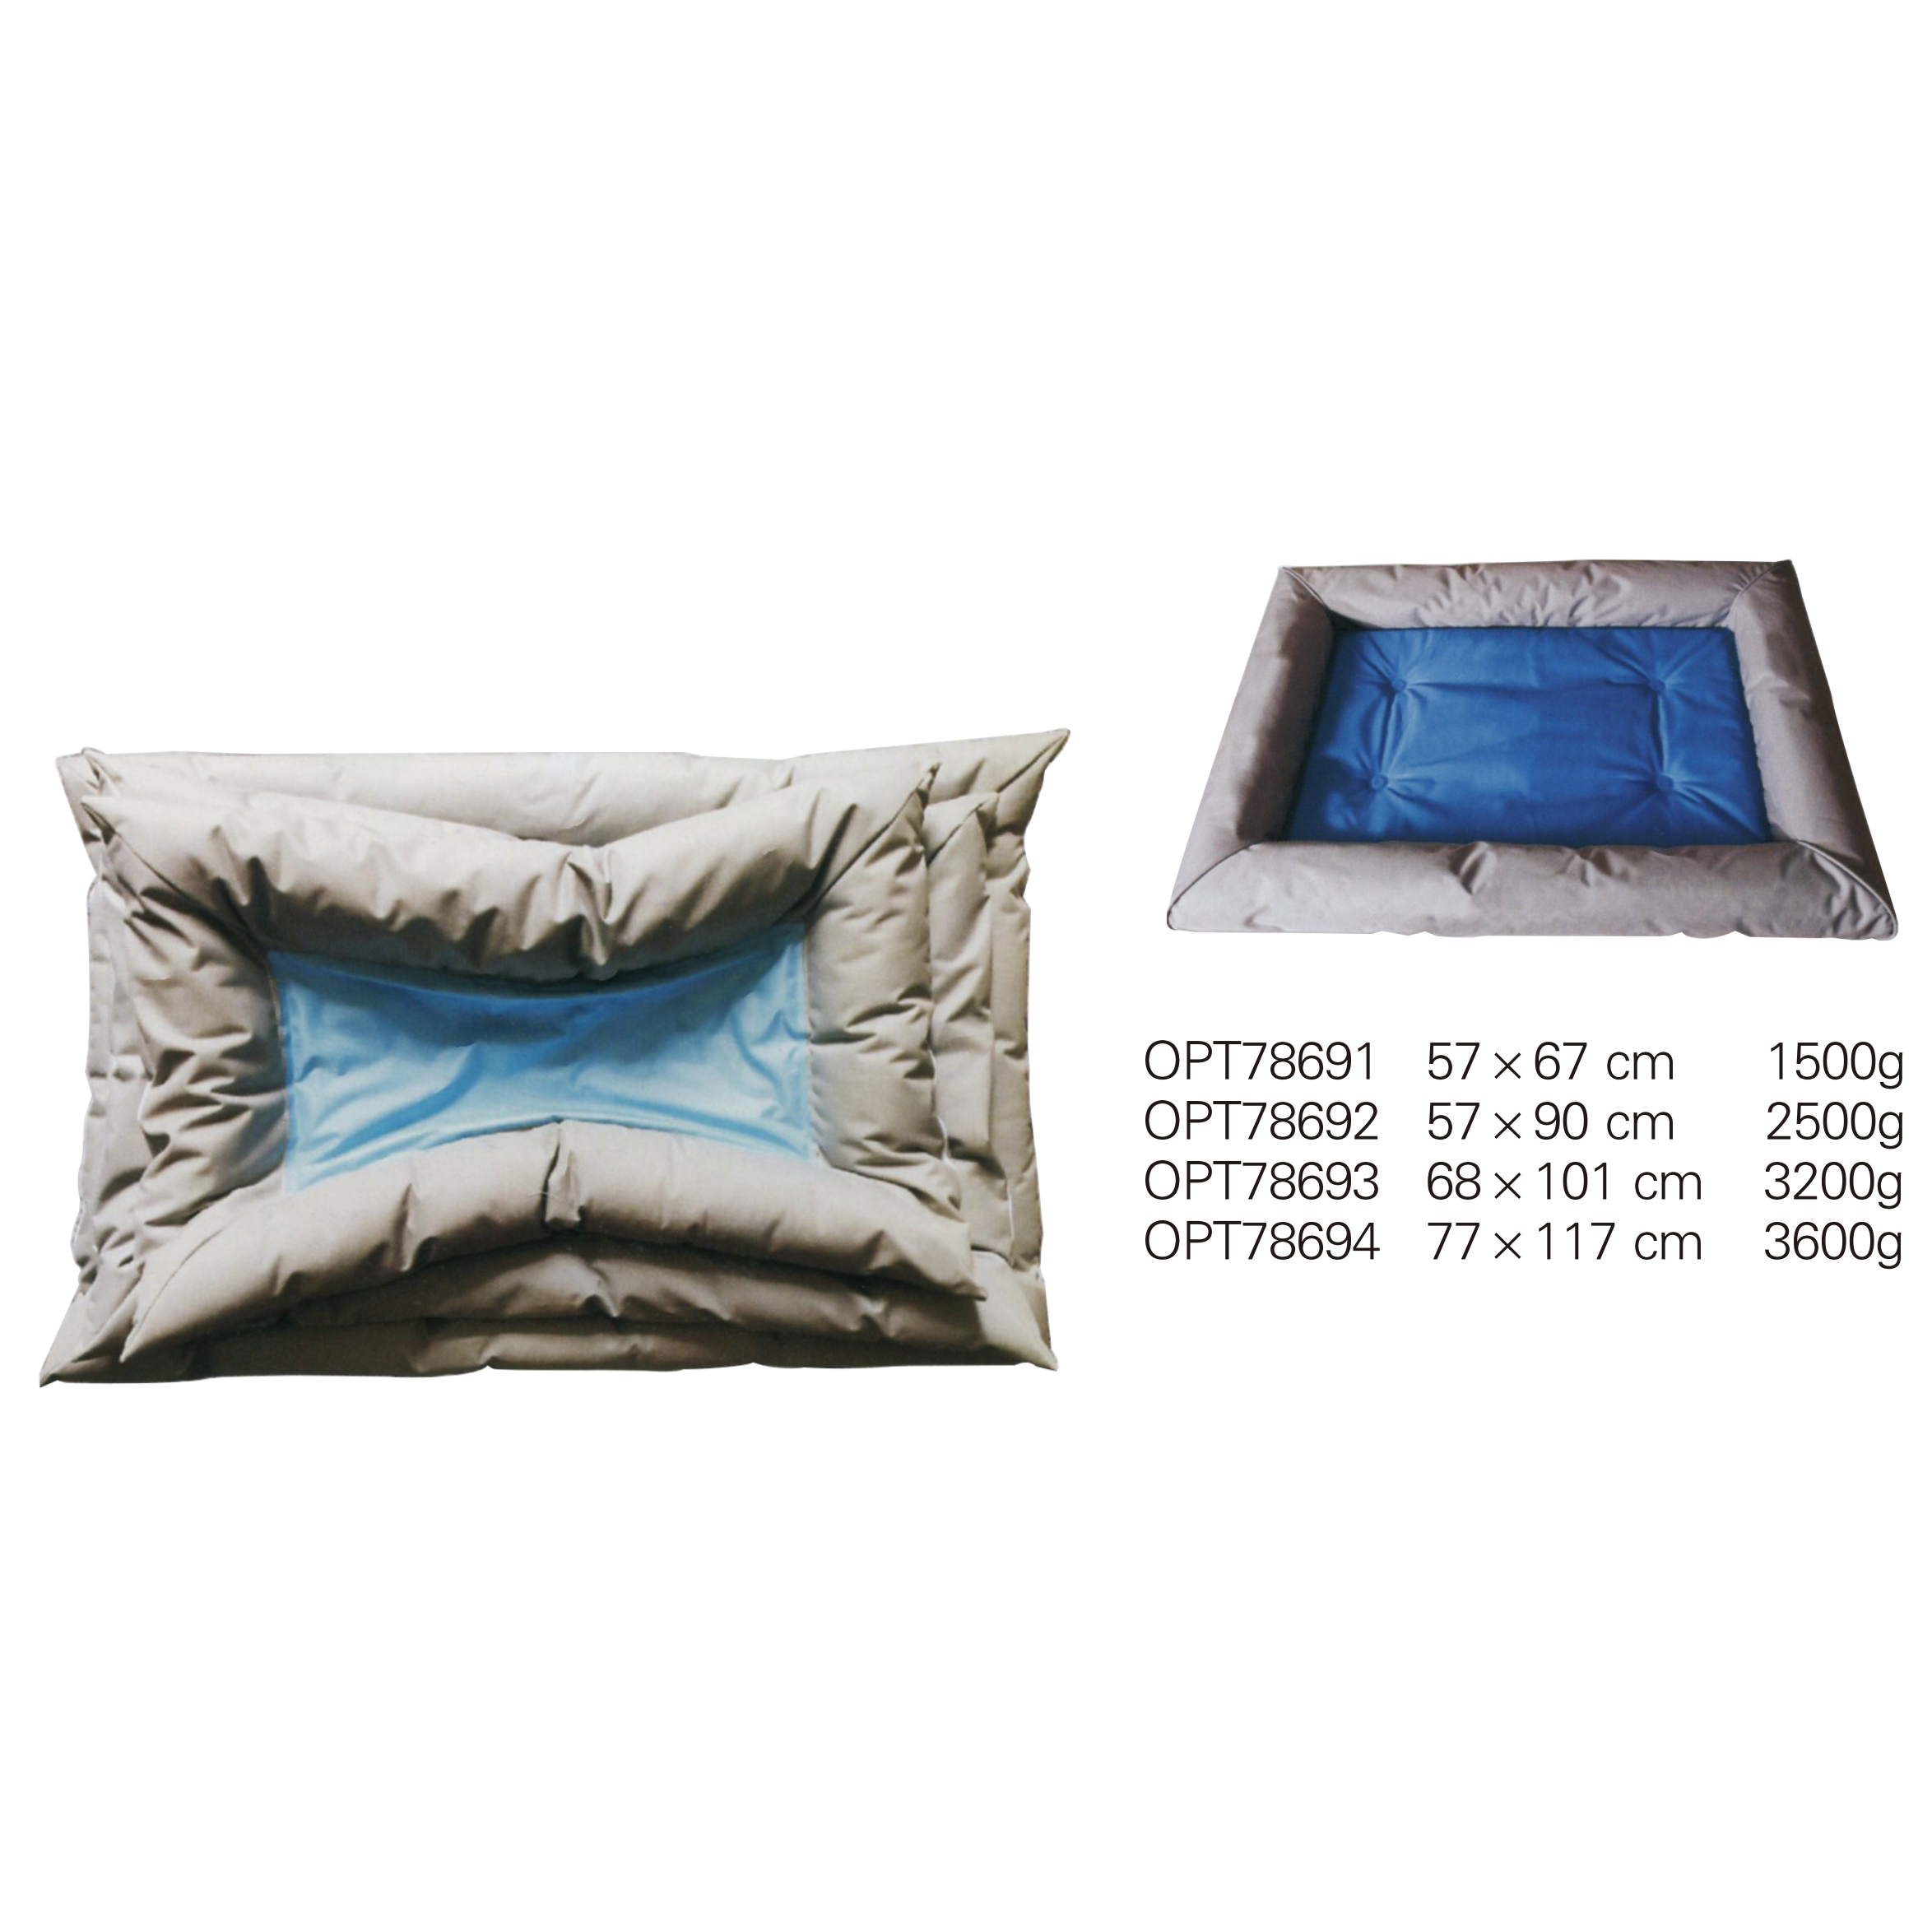 OPT78691-OPT78694 Cooling mats & beds